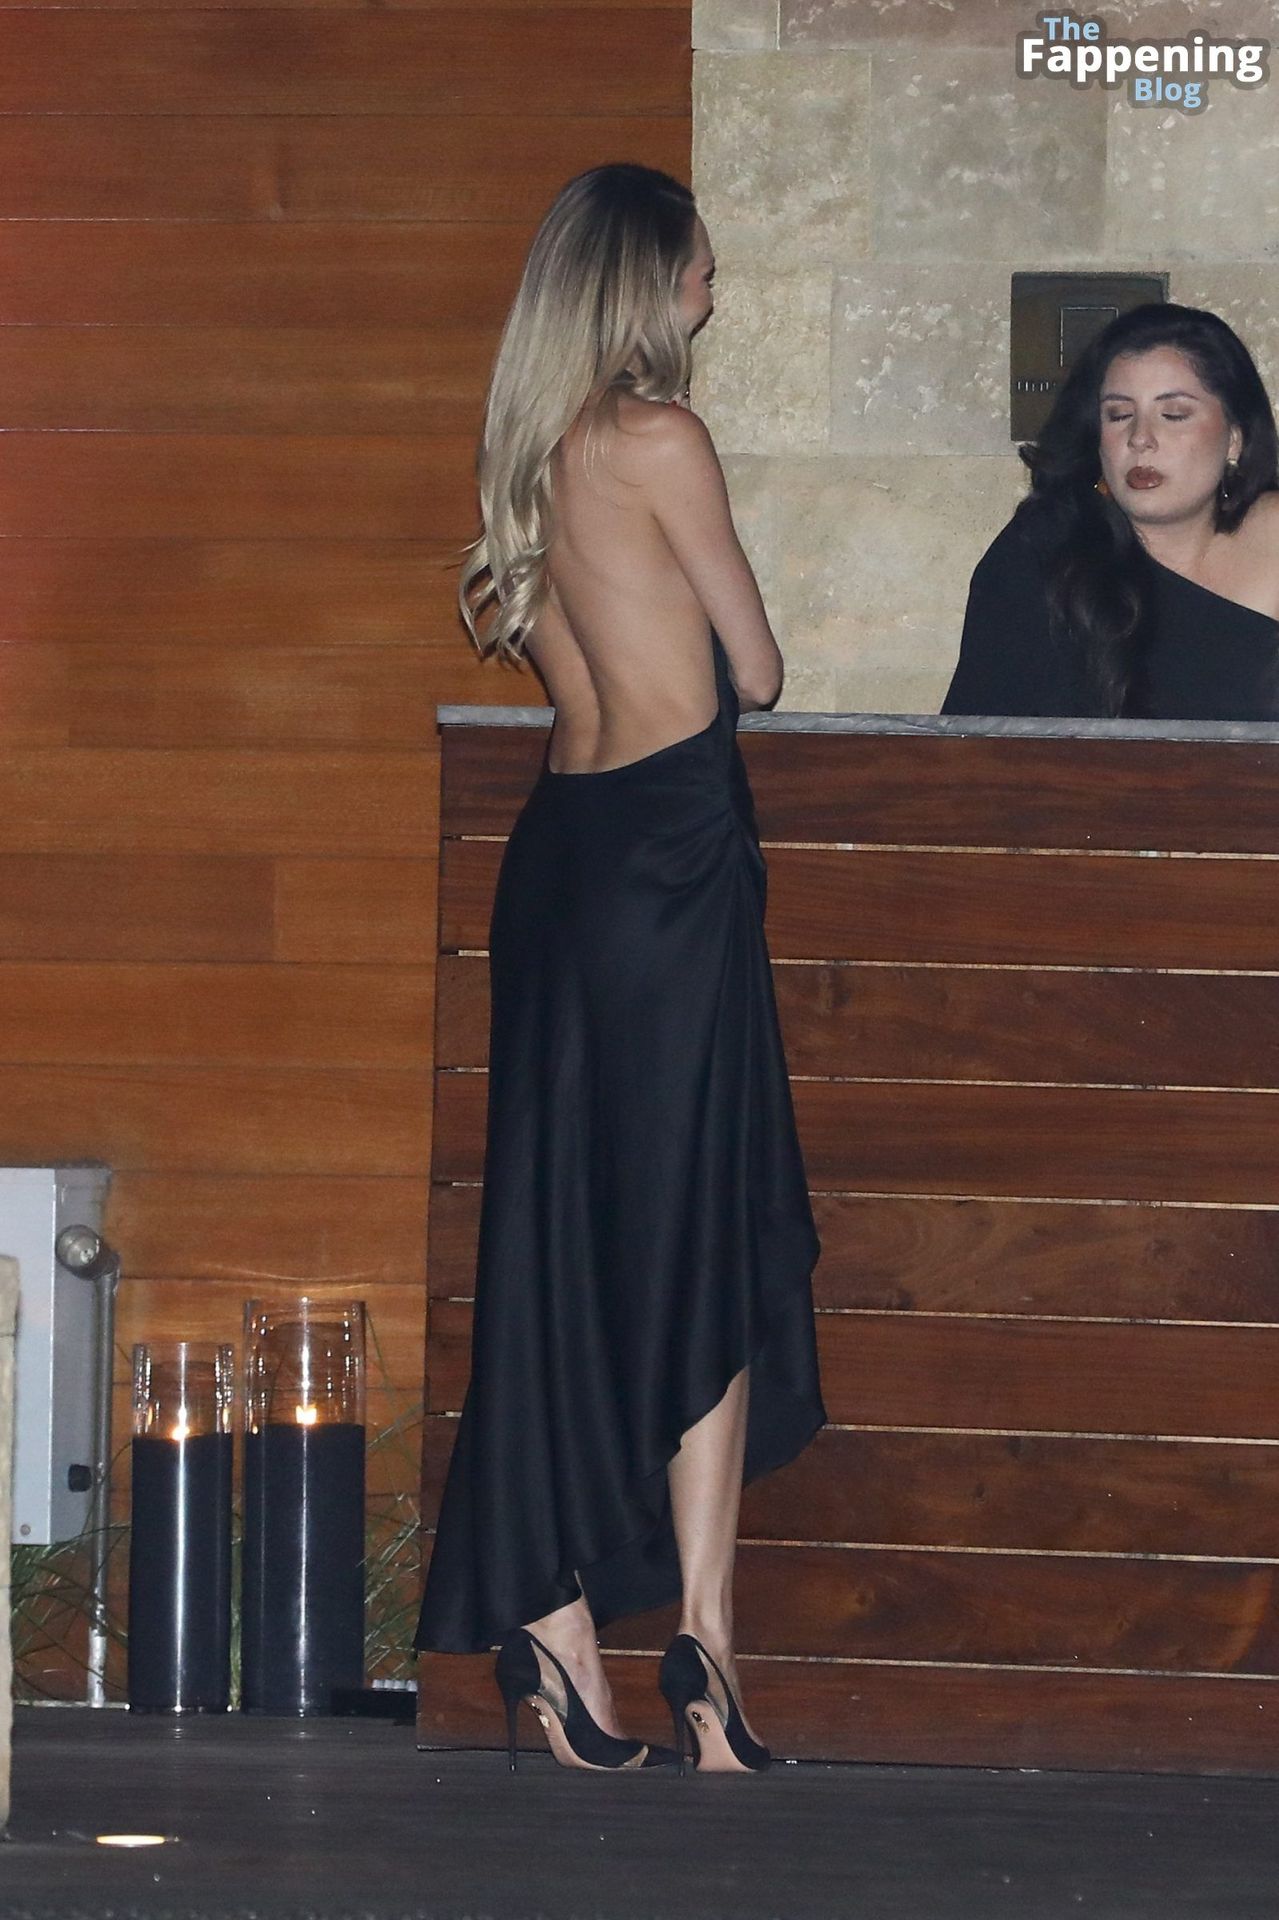 Candice Swanepoel Flaunts Her Slender Figure in a Black Dress in Malibu (17 Photos)